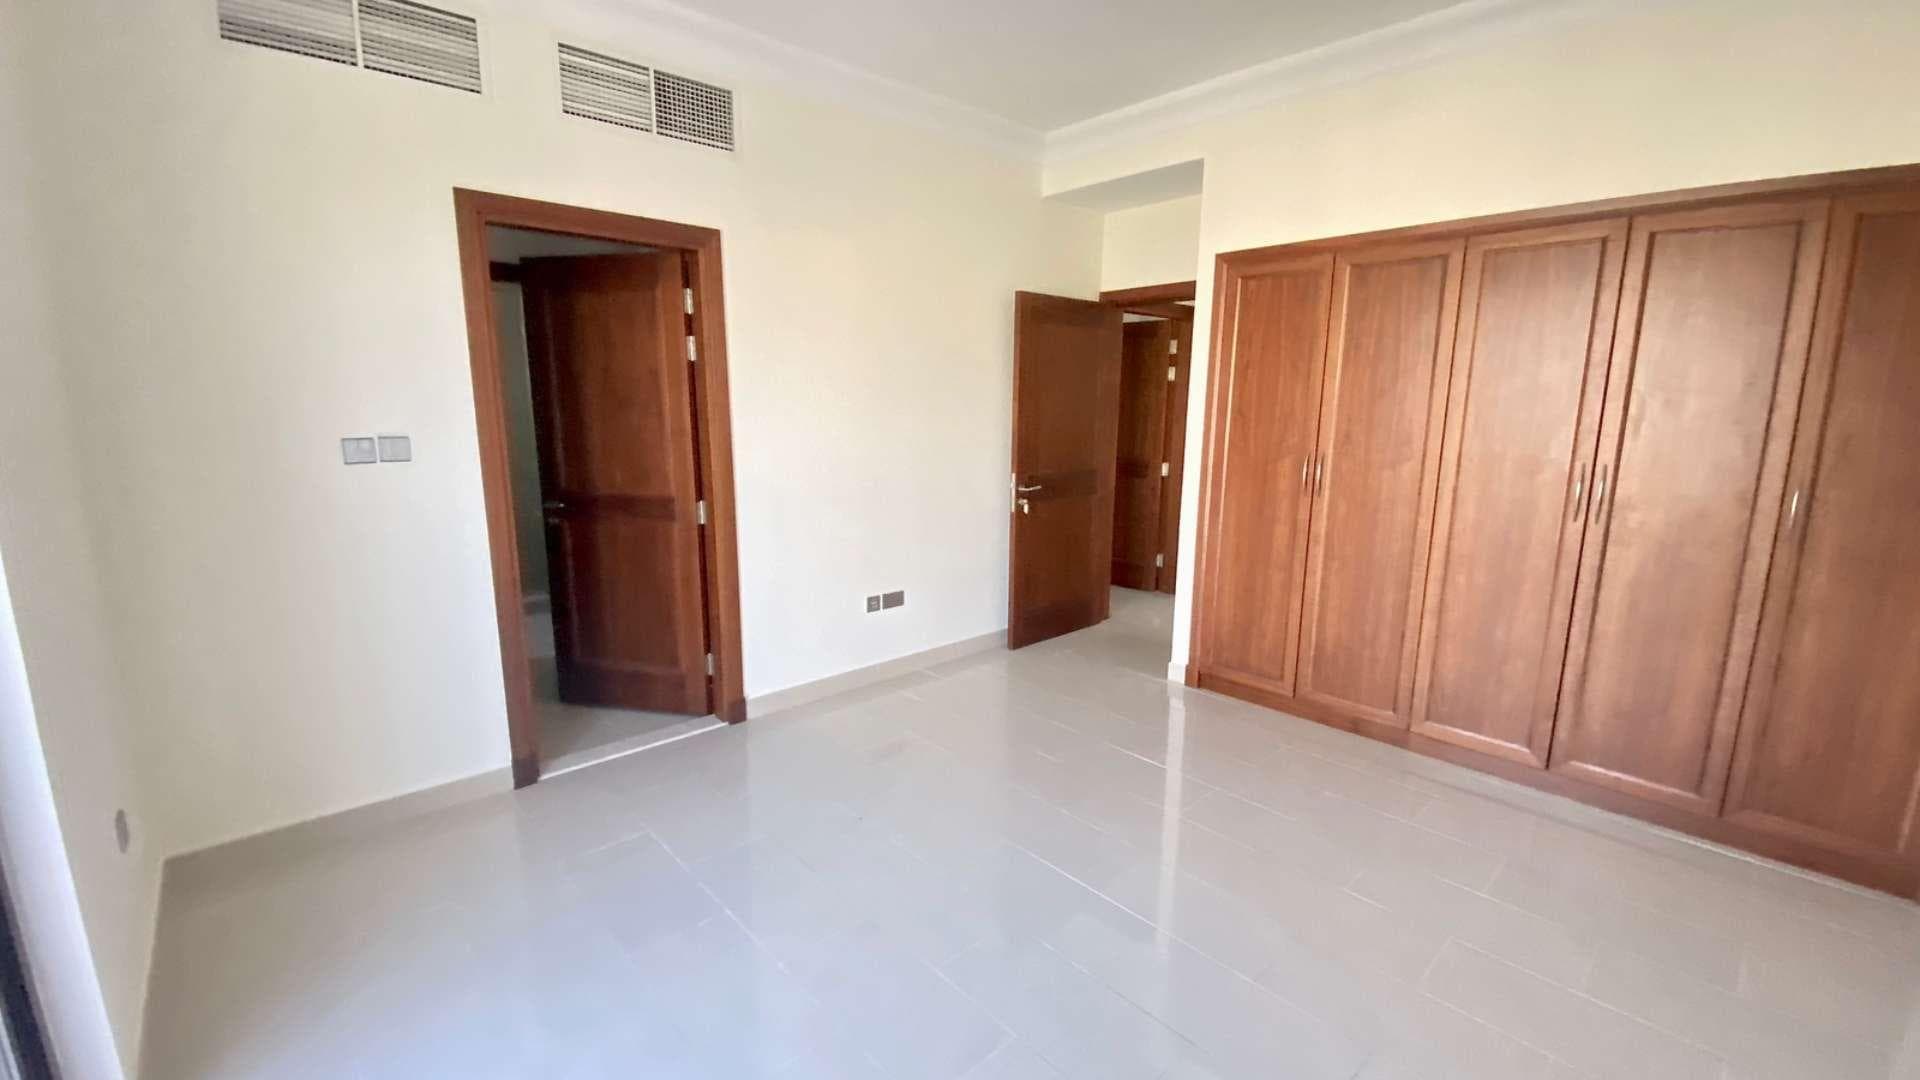 6 Bedroom Villa For Sale Aseel Lp37478 2b526985f813b200.jpg